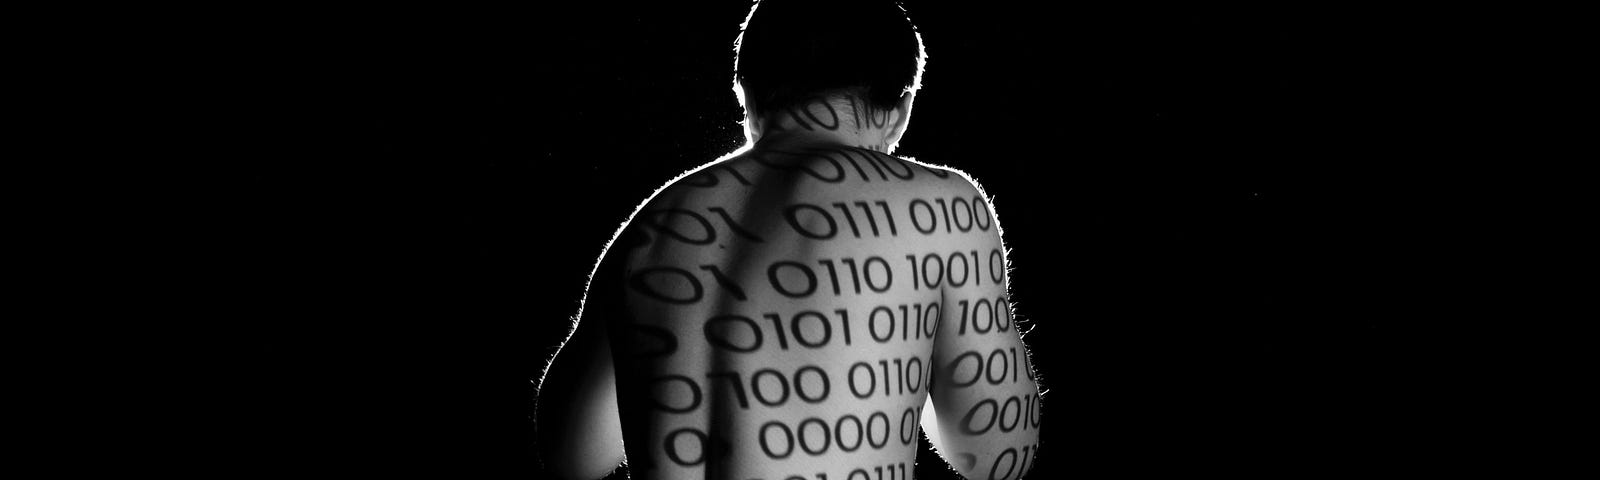 binary number on body, #digitalhealth, #ai, #healthcare, #hit, #hcldr